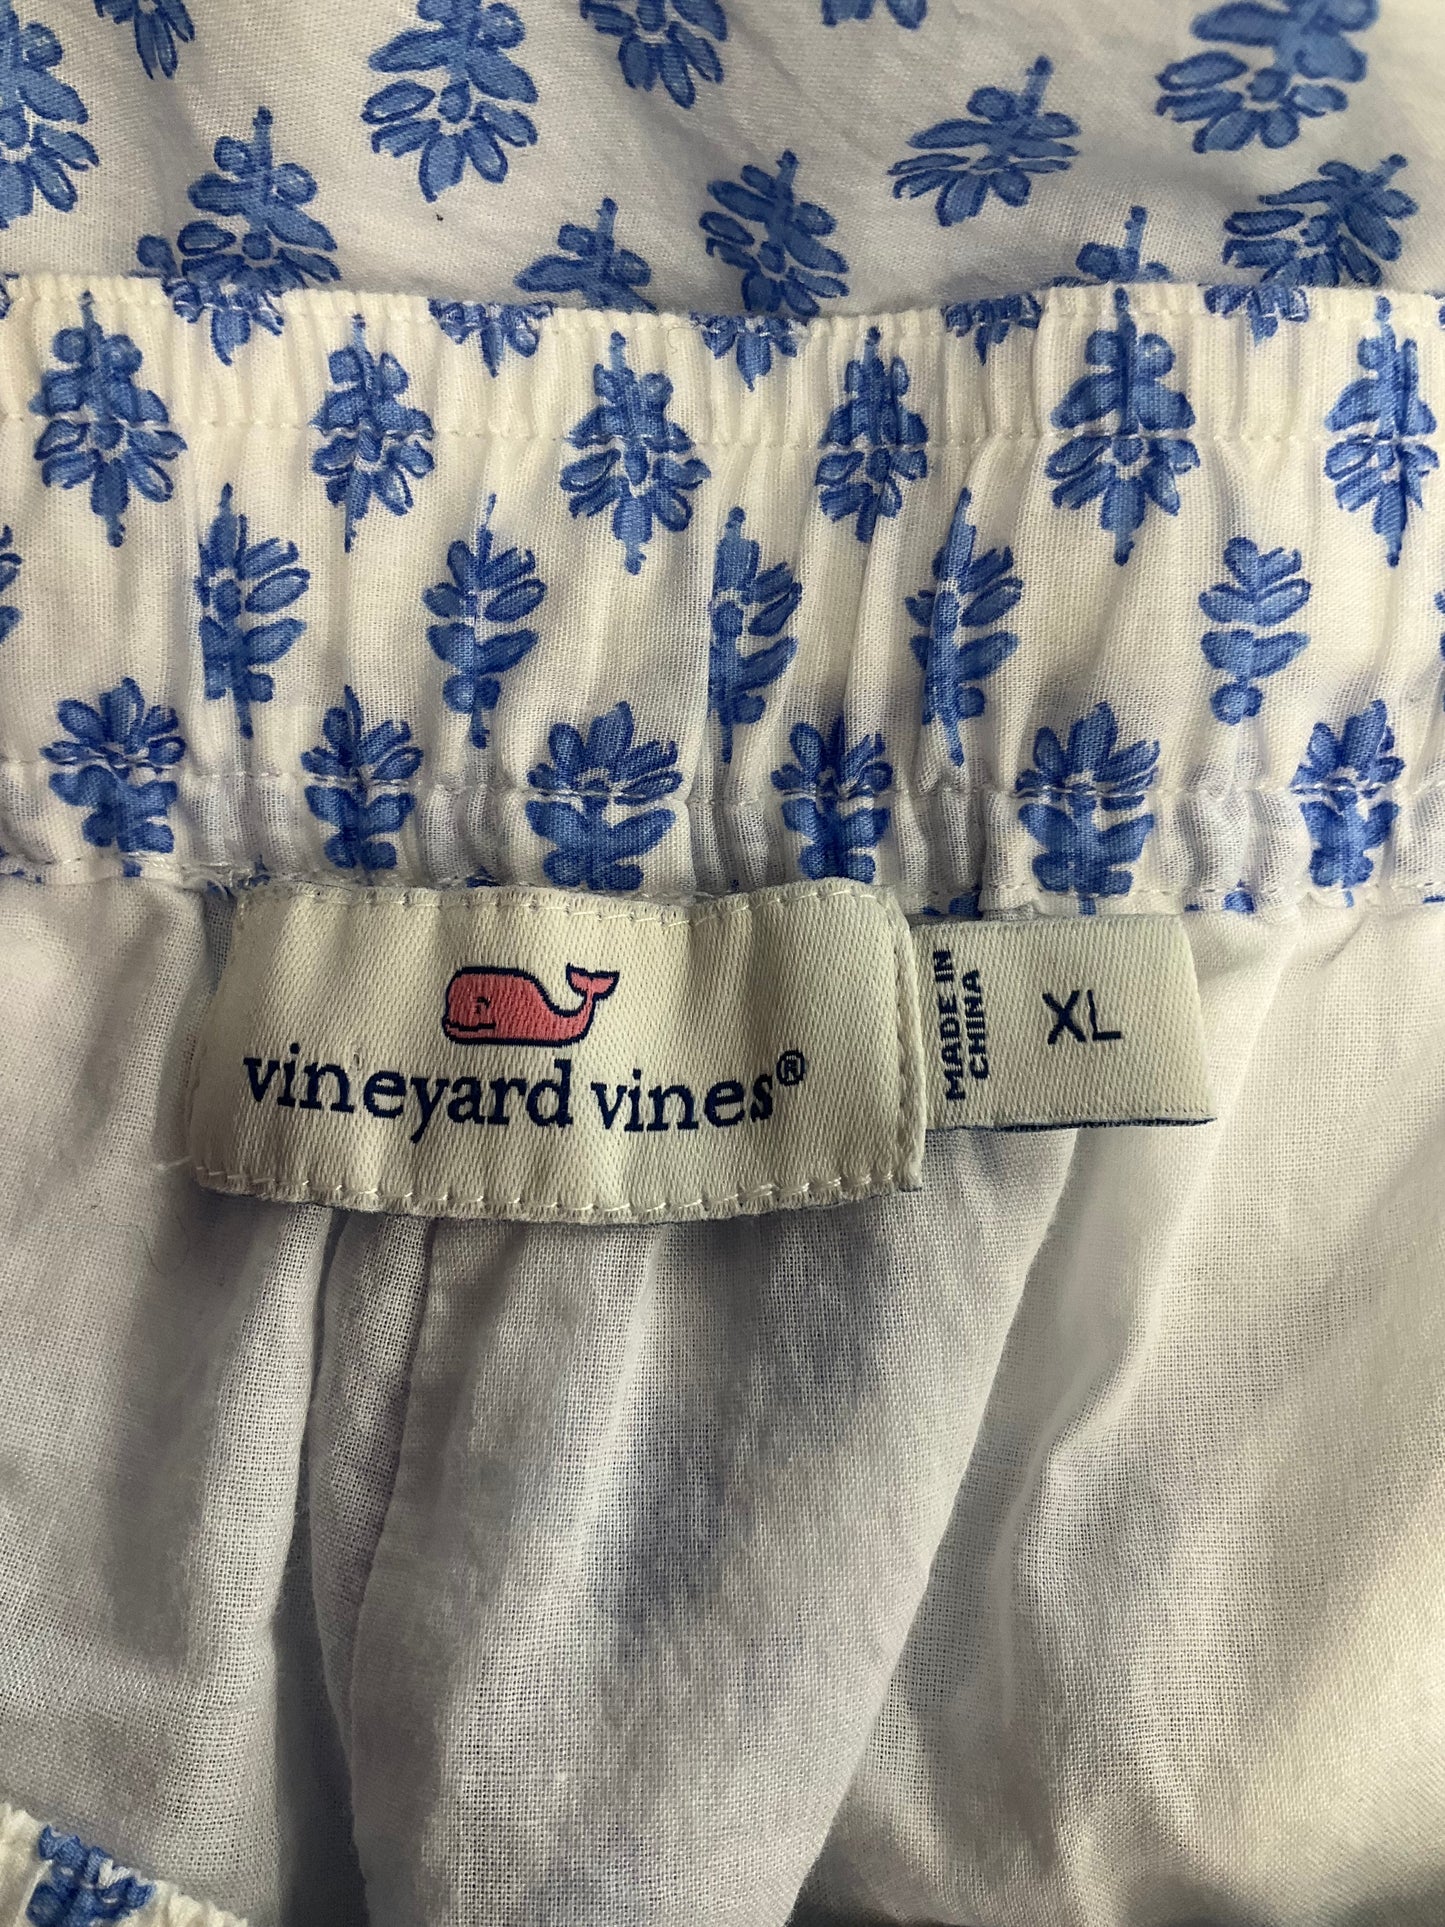 Shorts By Vineyard Vines  Size: 14